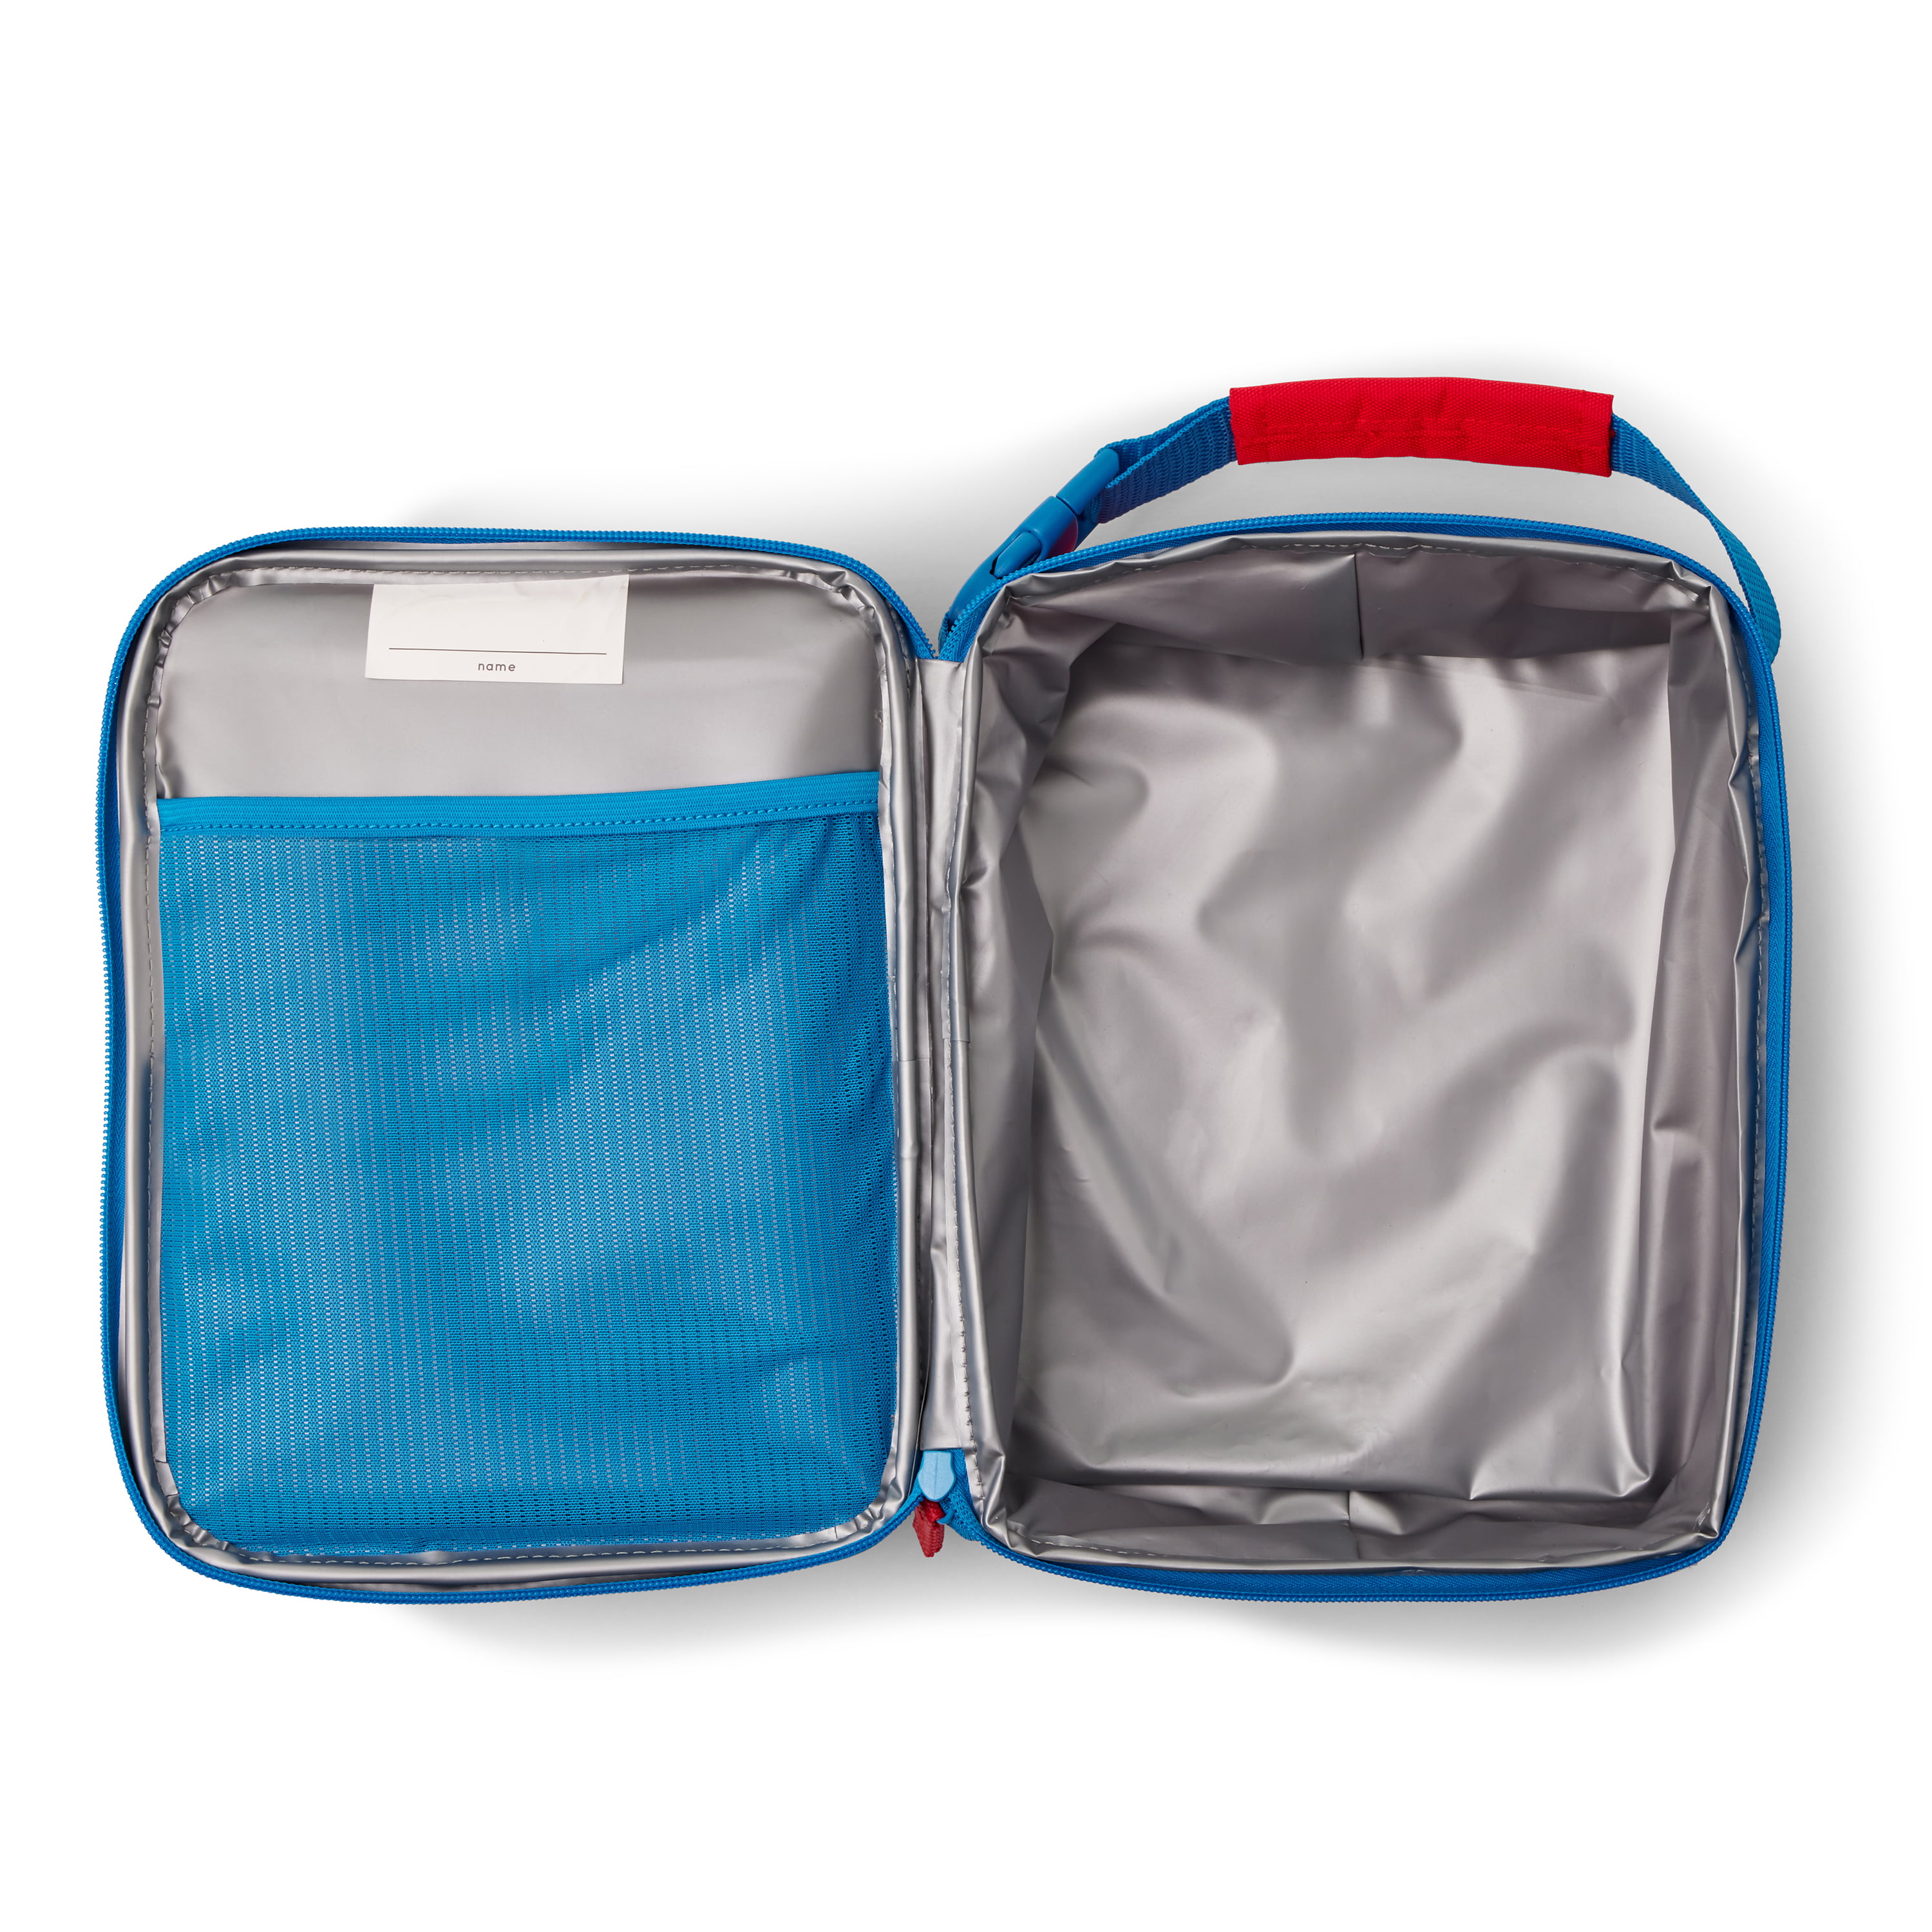 Buc-ee's Kids Lunch Bag, Kids Unisex, Size: One size, Blue